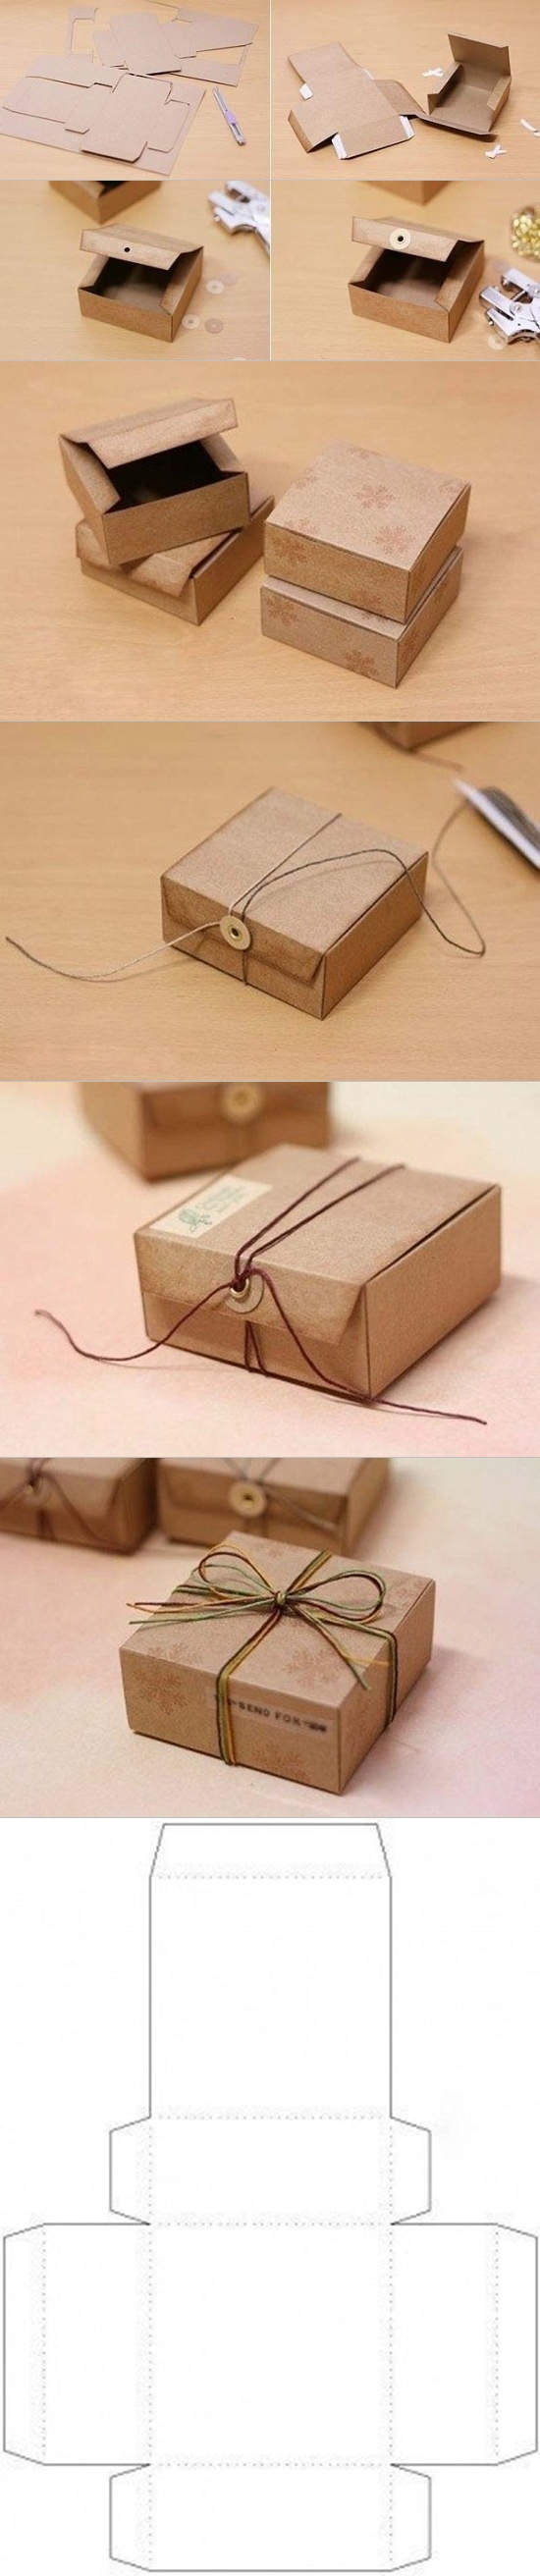 Diy Gift Box From Cardboard Tutorials